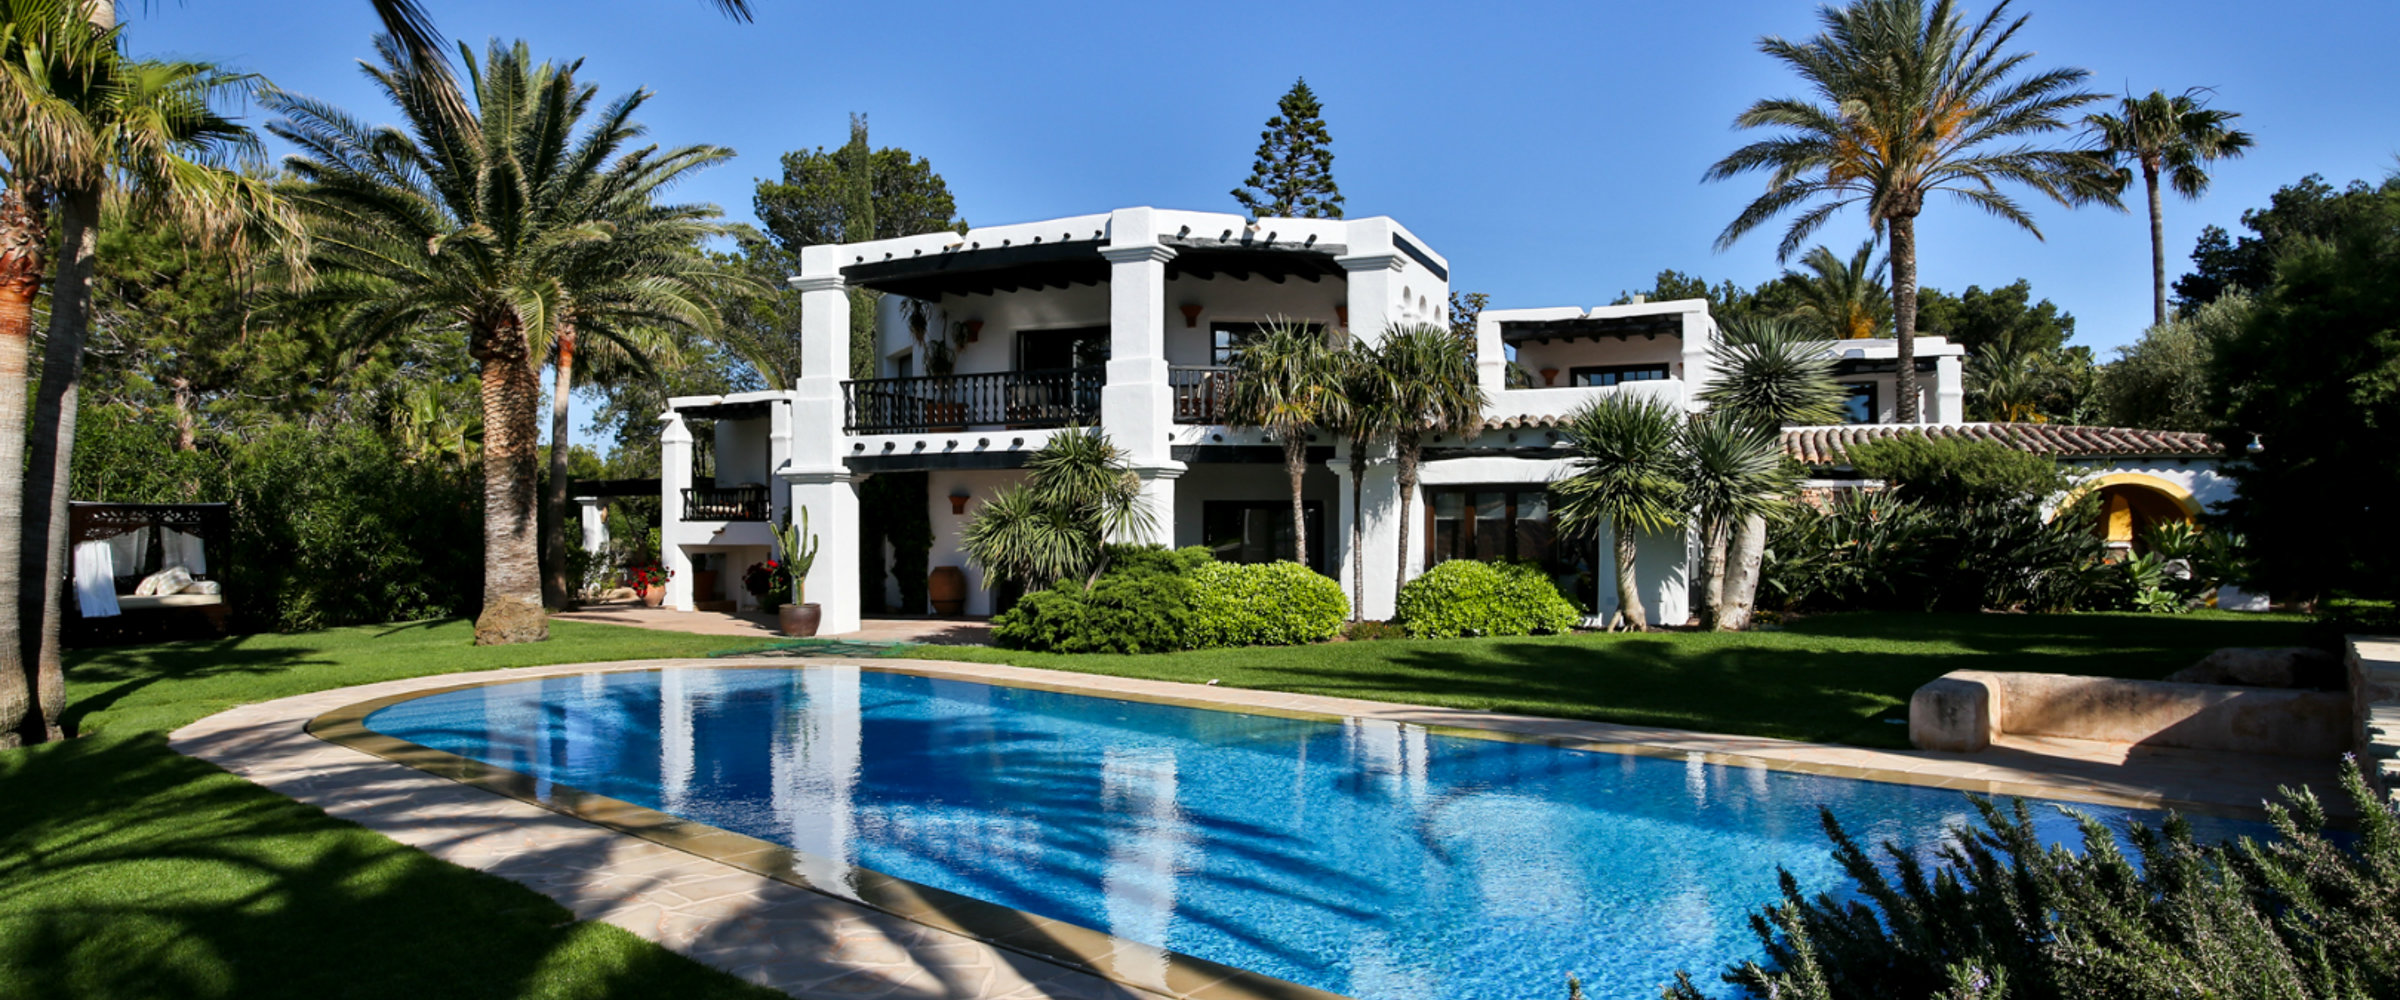 Villa Brias Ibiza Porroig